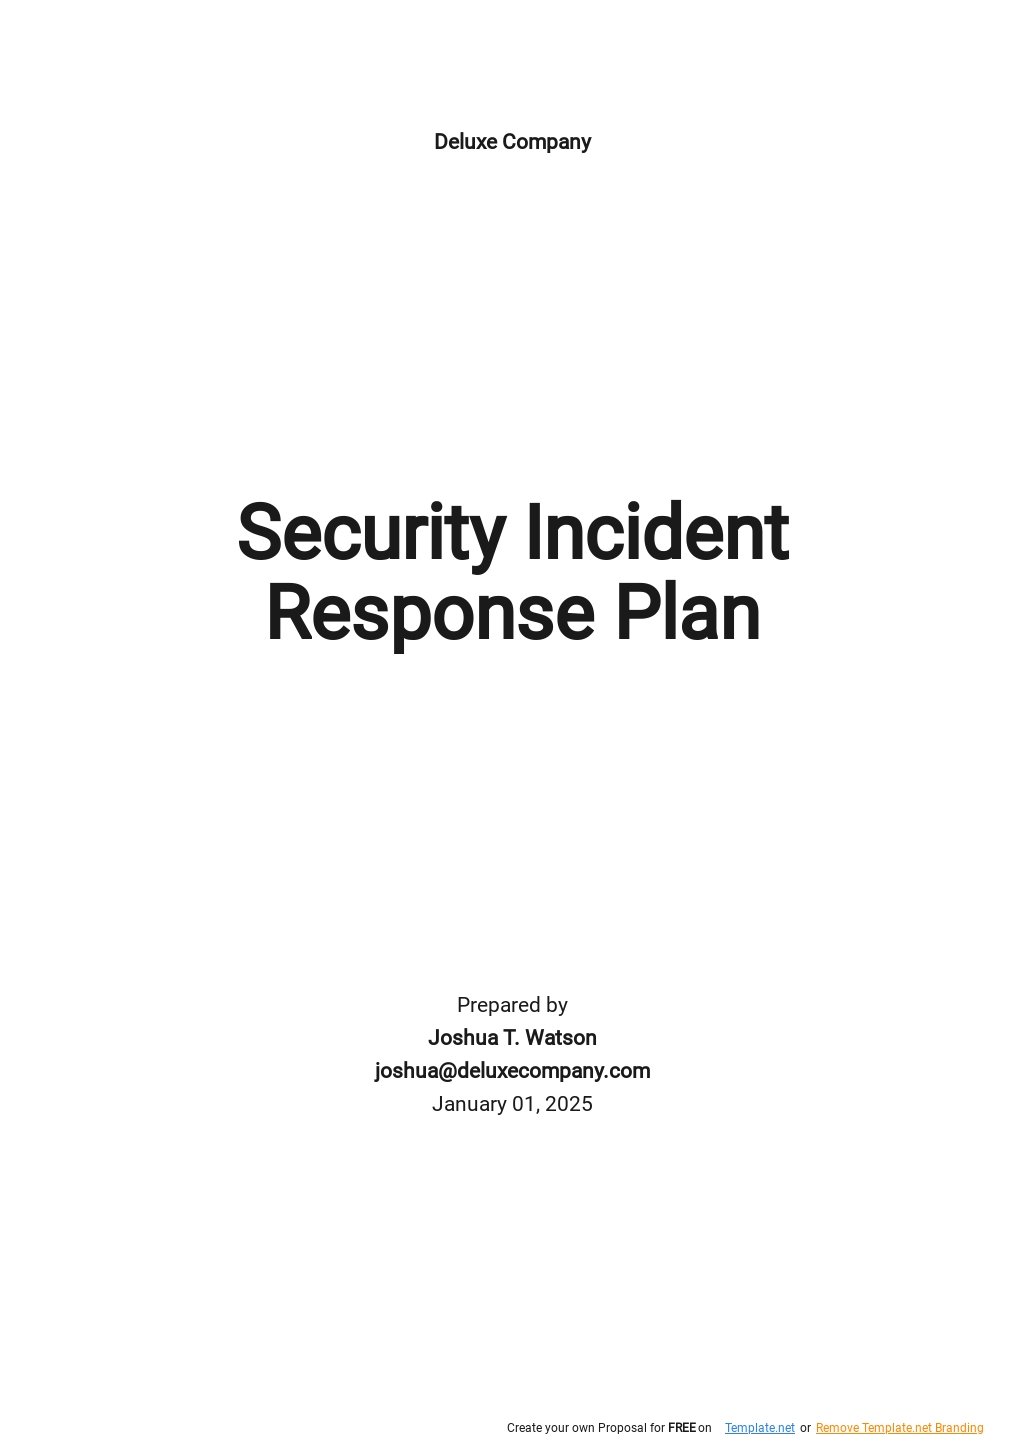 Security Incident Response Plan Template.jpe